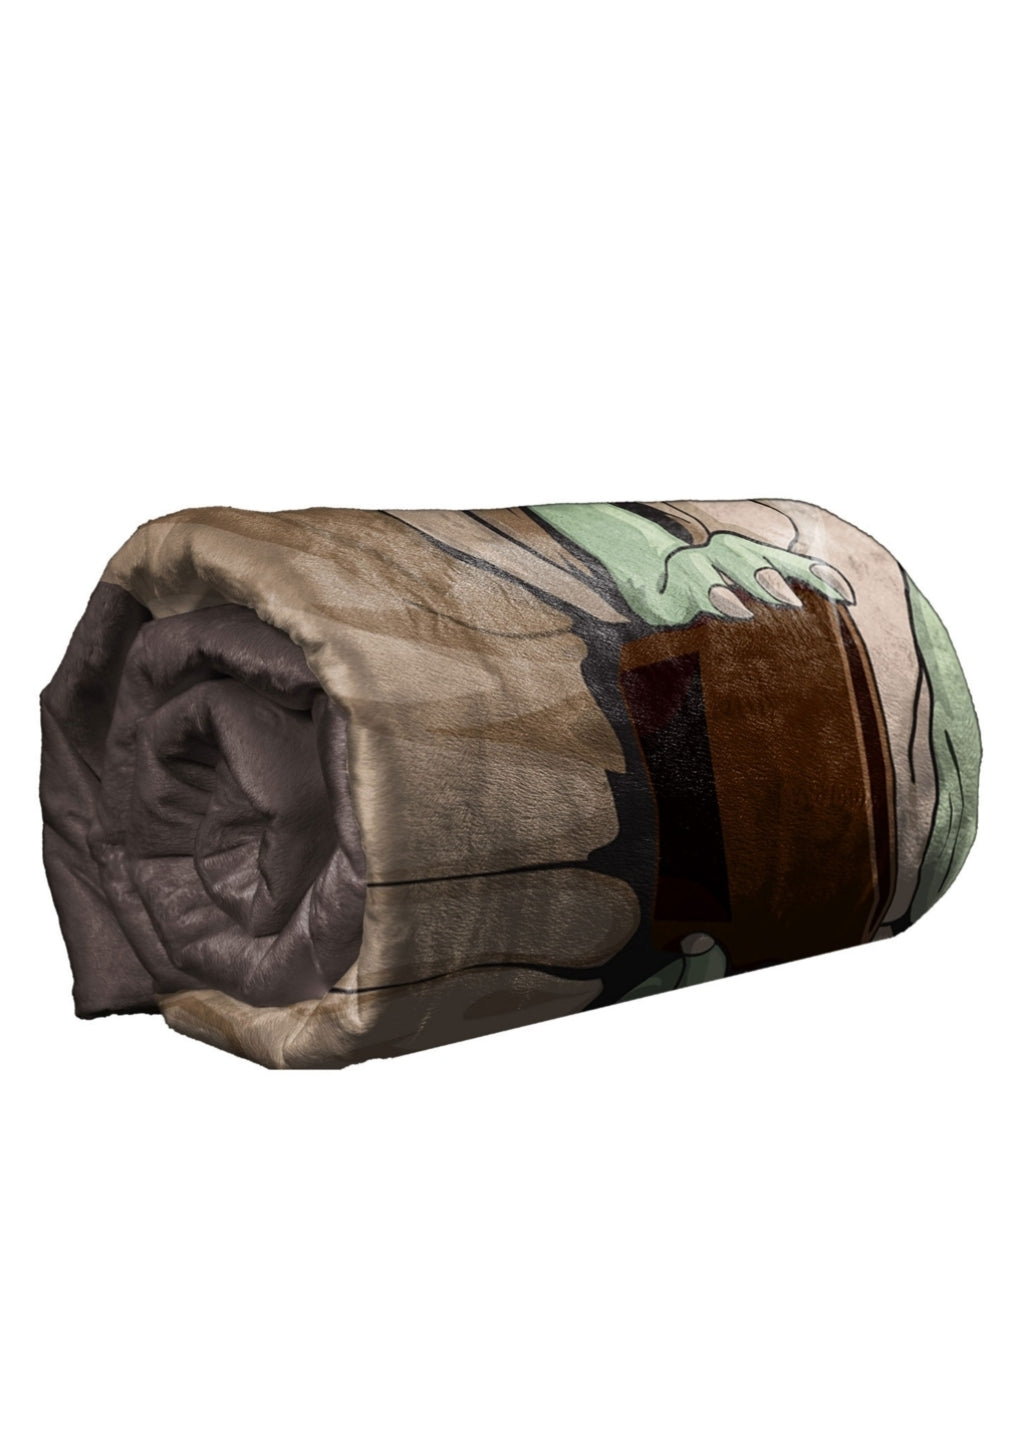 Star Wars: The Mandalorian Cloud Sherpa Throw Blanket, 50" x 60" (Various Designs)